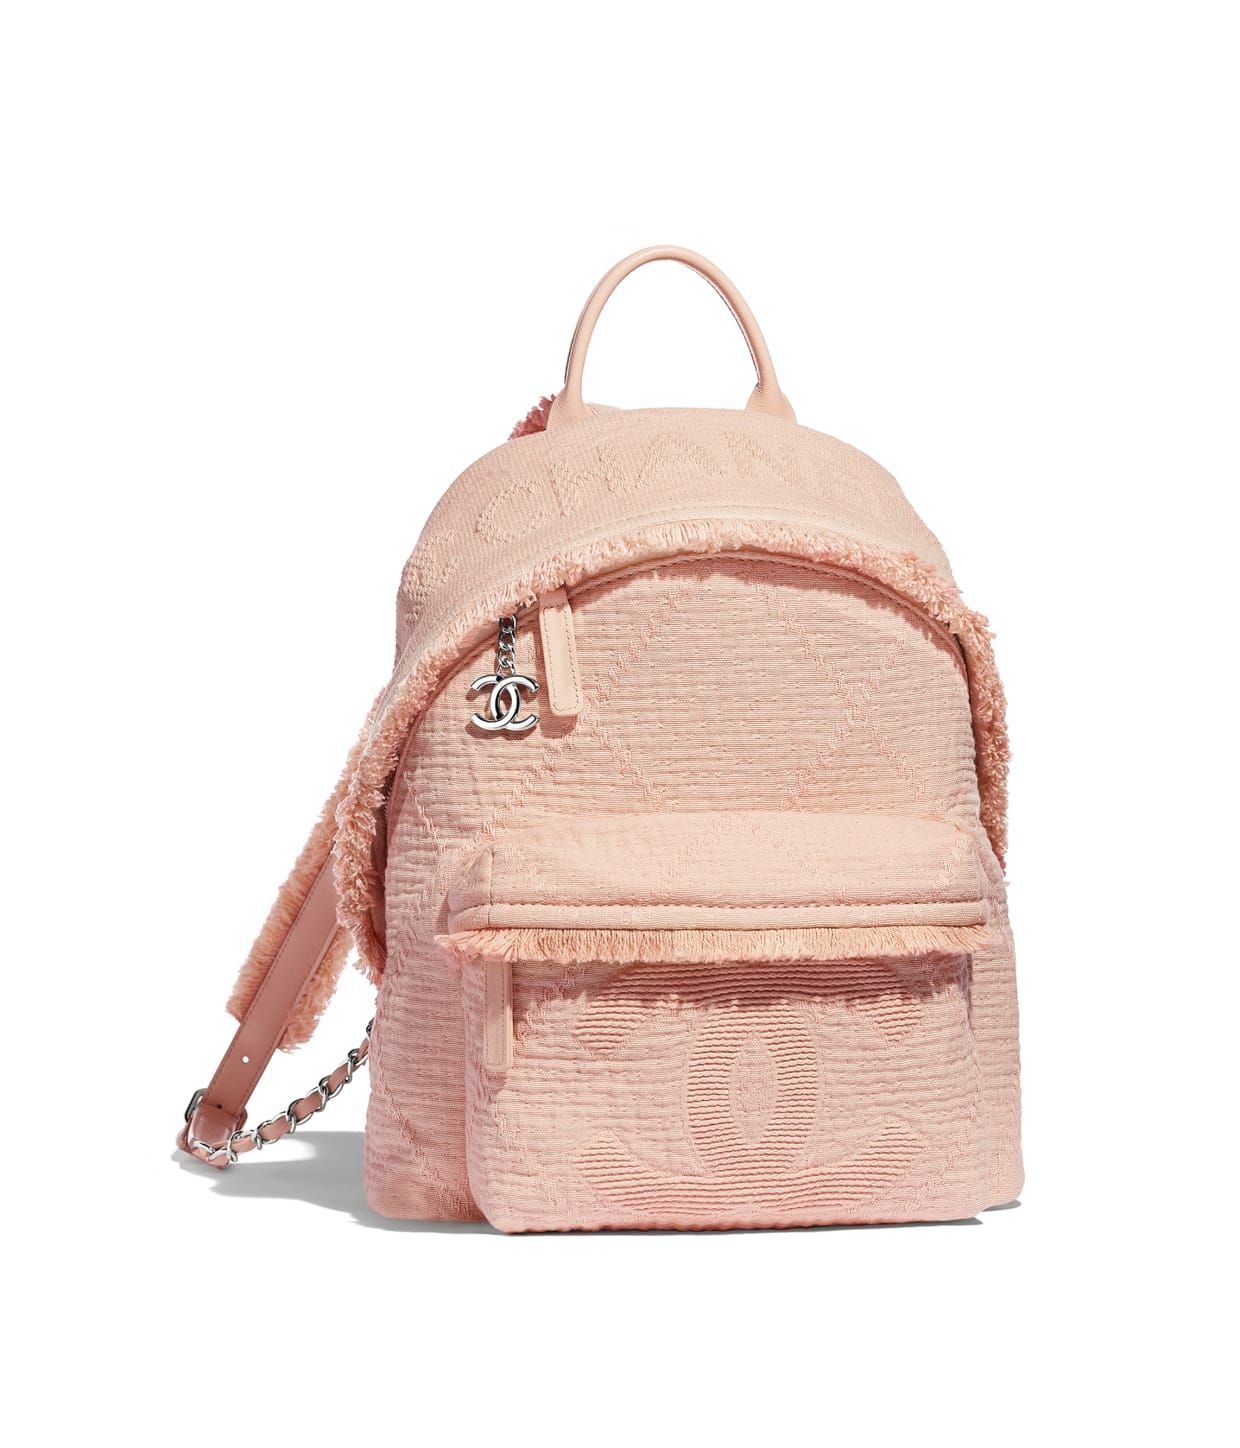 Mixed Fibers, Goatskin, Silver-Tone Metal Light Pink Backpack | CHANEL | Chanel, Inc. (US)